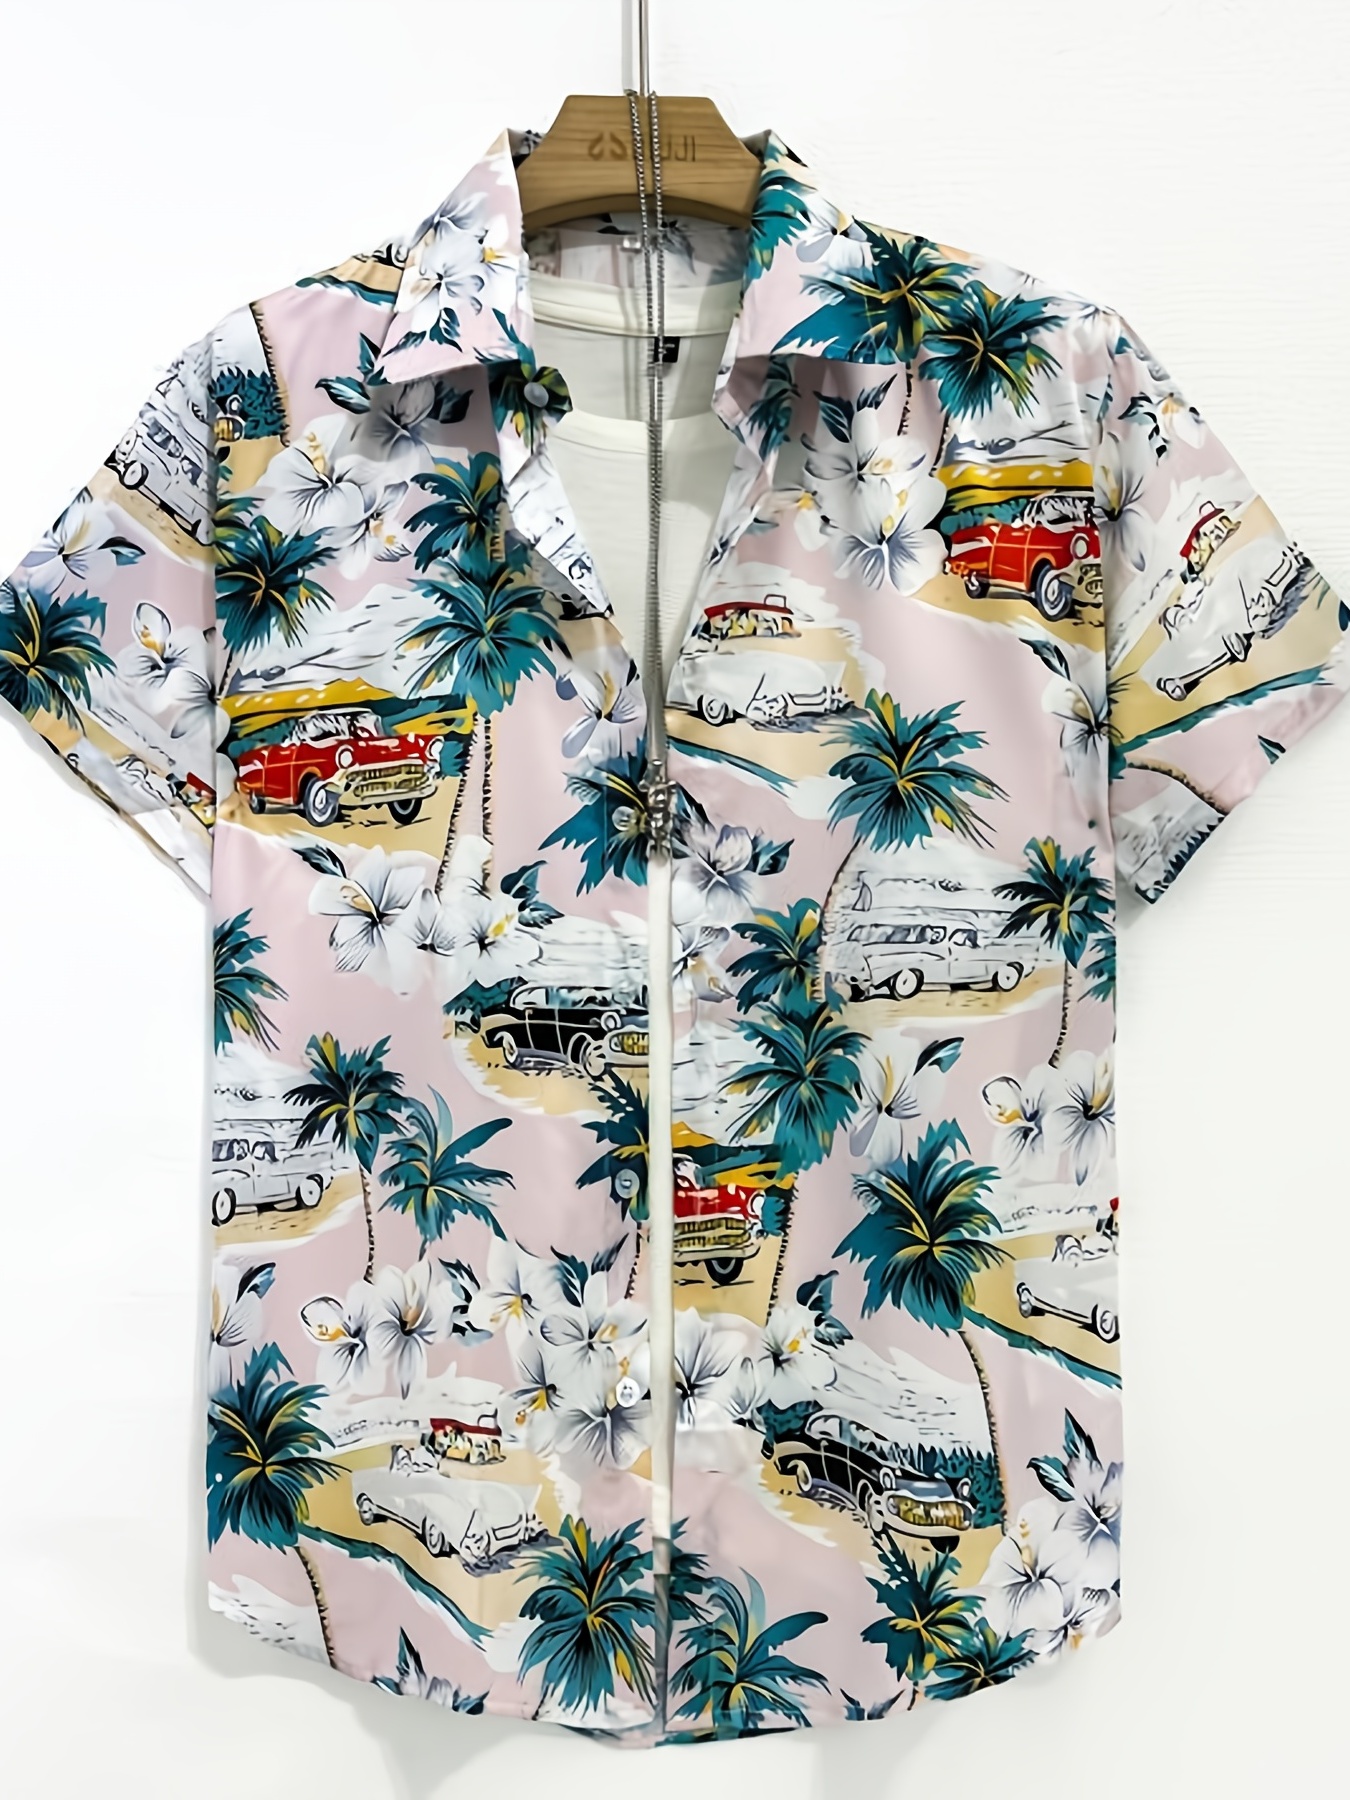 coconut tree vintage car print mens casual short sleeve shirt mens shirt for summer vacation resort details 0